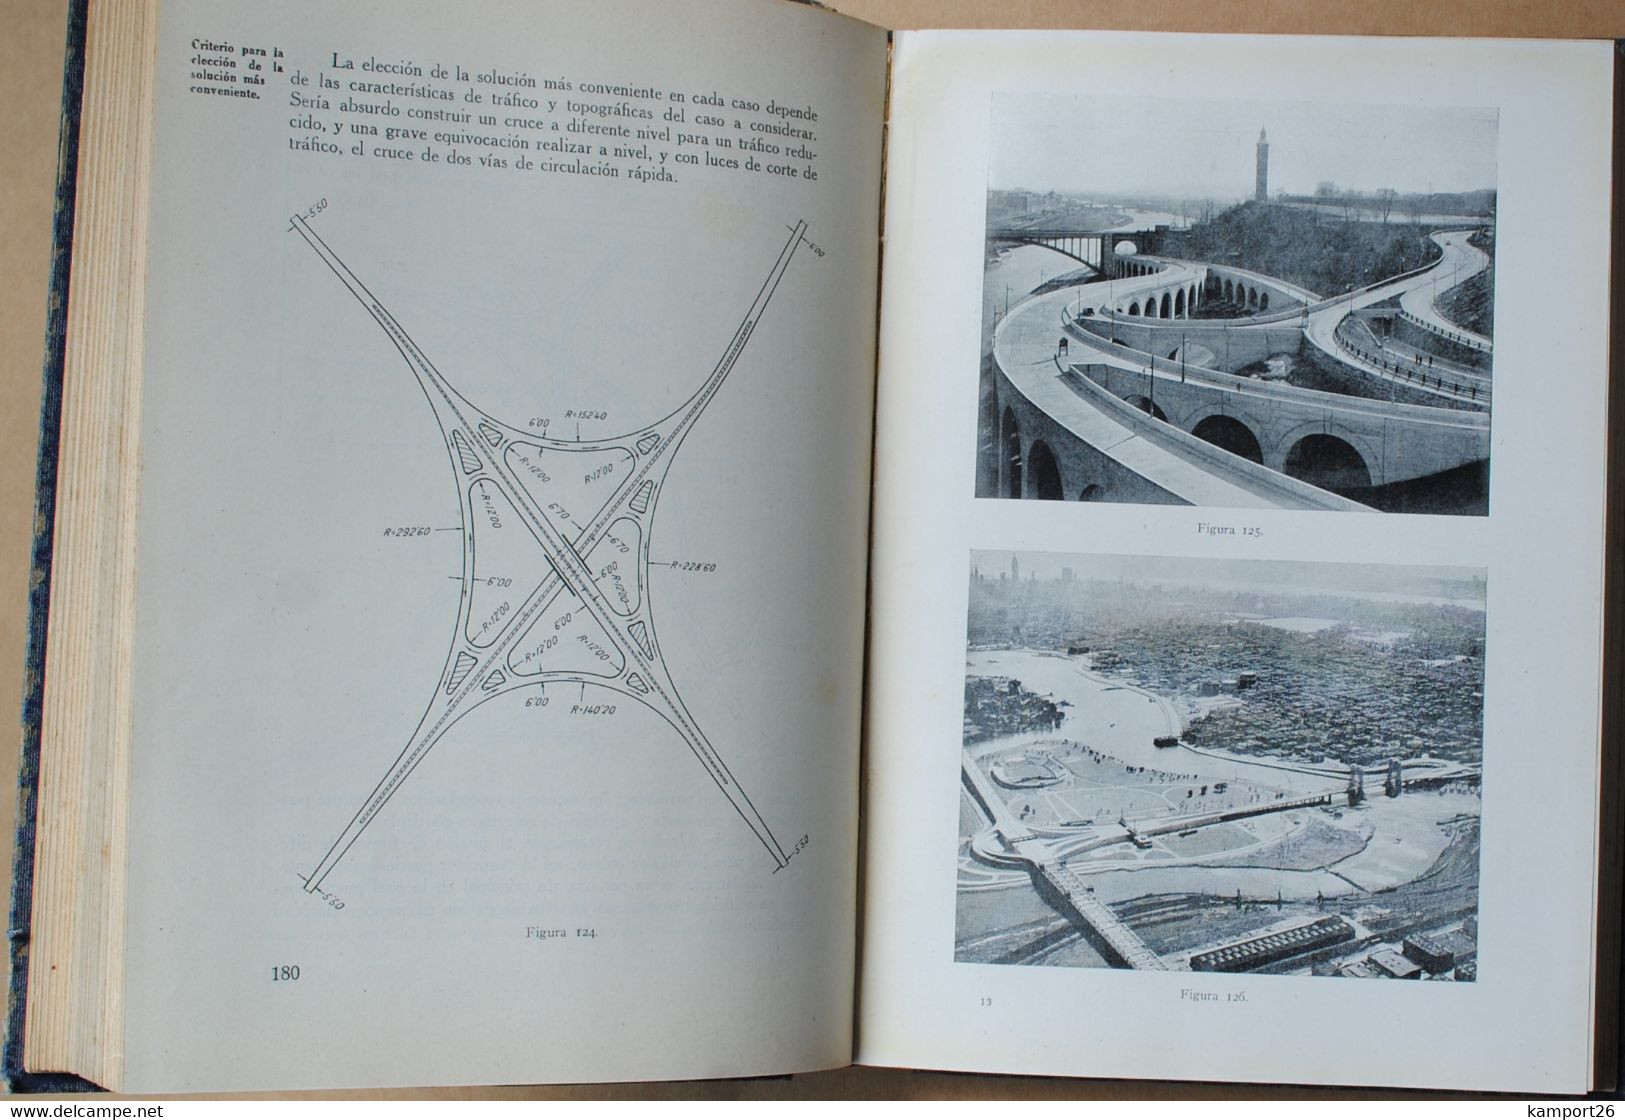 1949 CAMINOS Jose Luis Escario ILLUSTRÉ Roads ILLUSTRATED History TECHNOLOGY Сonstruction - Práctico